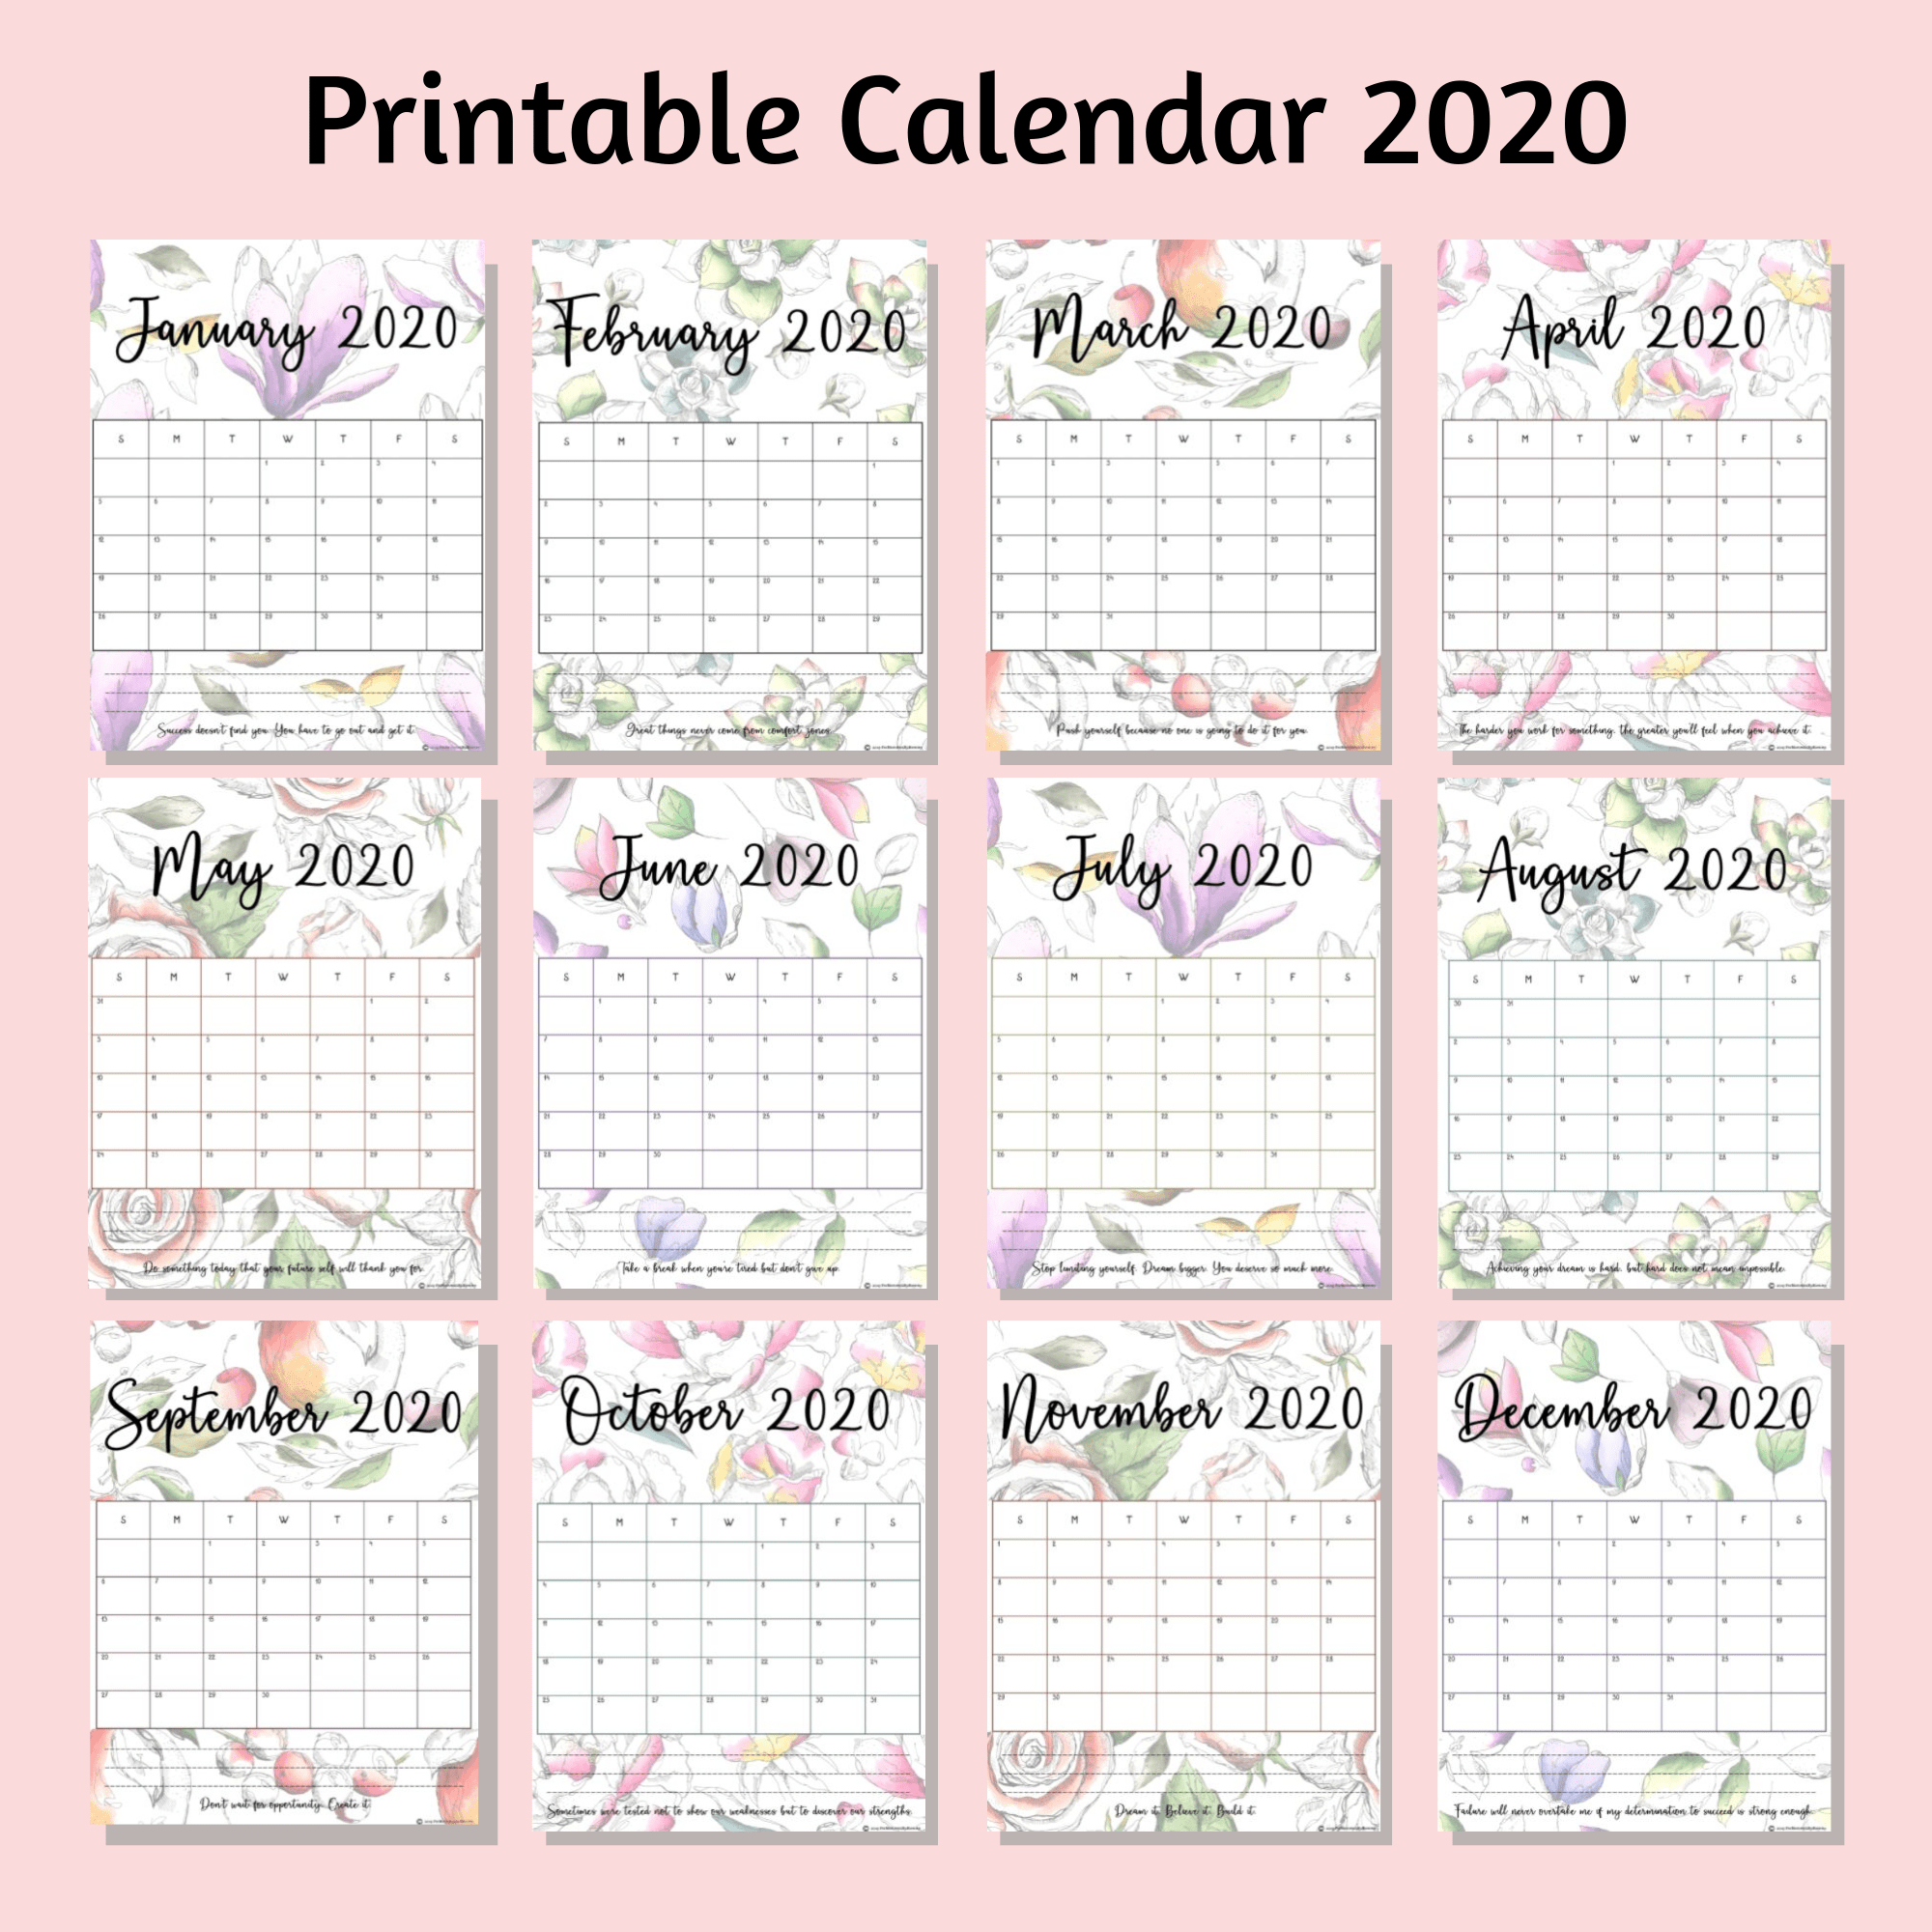 Printable Calendar 2020 In Beautiful Floral Designs